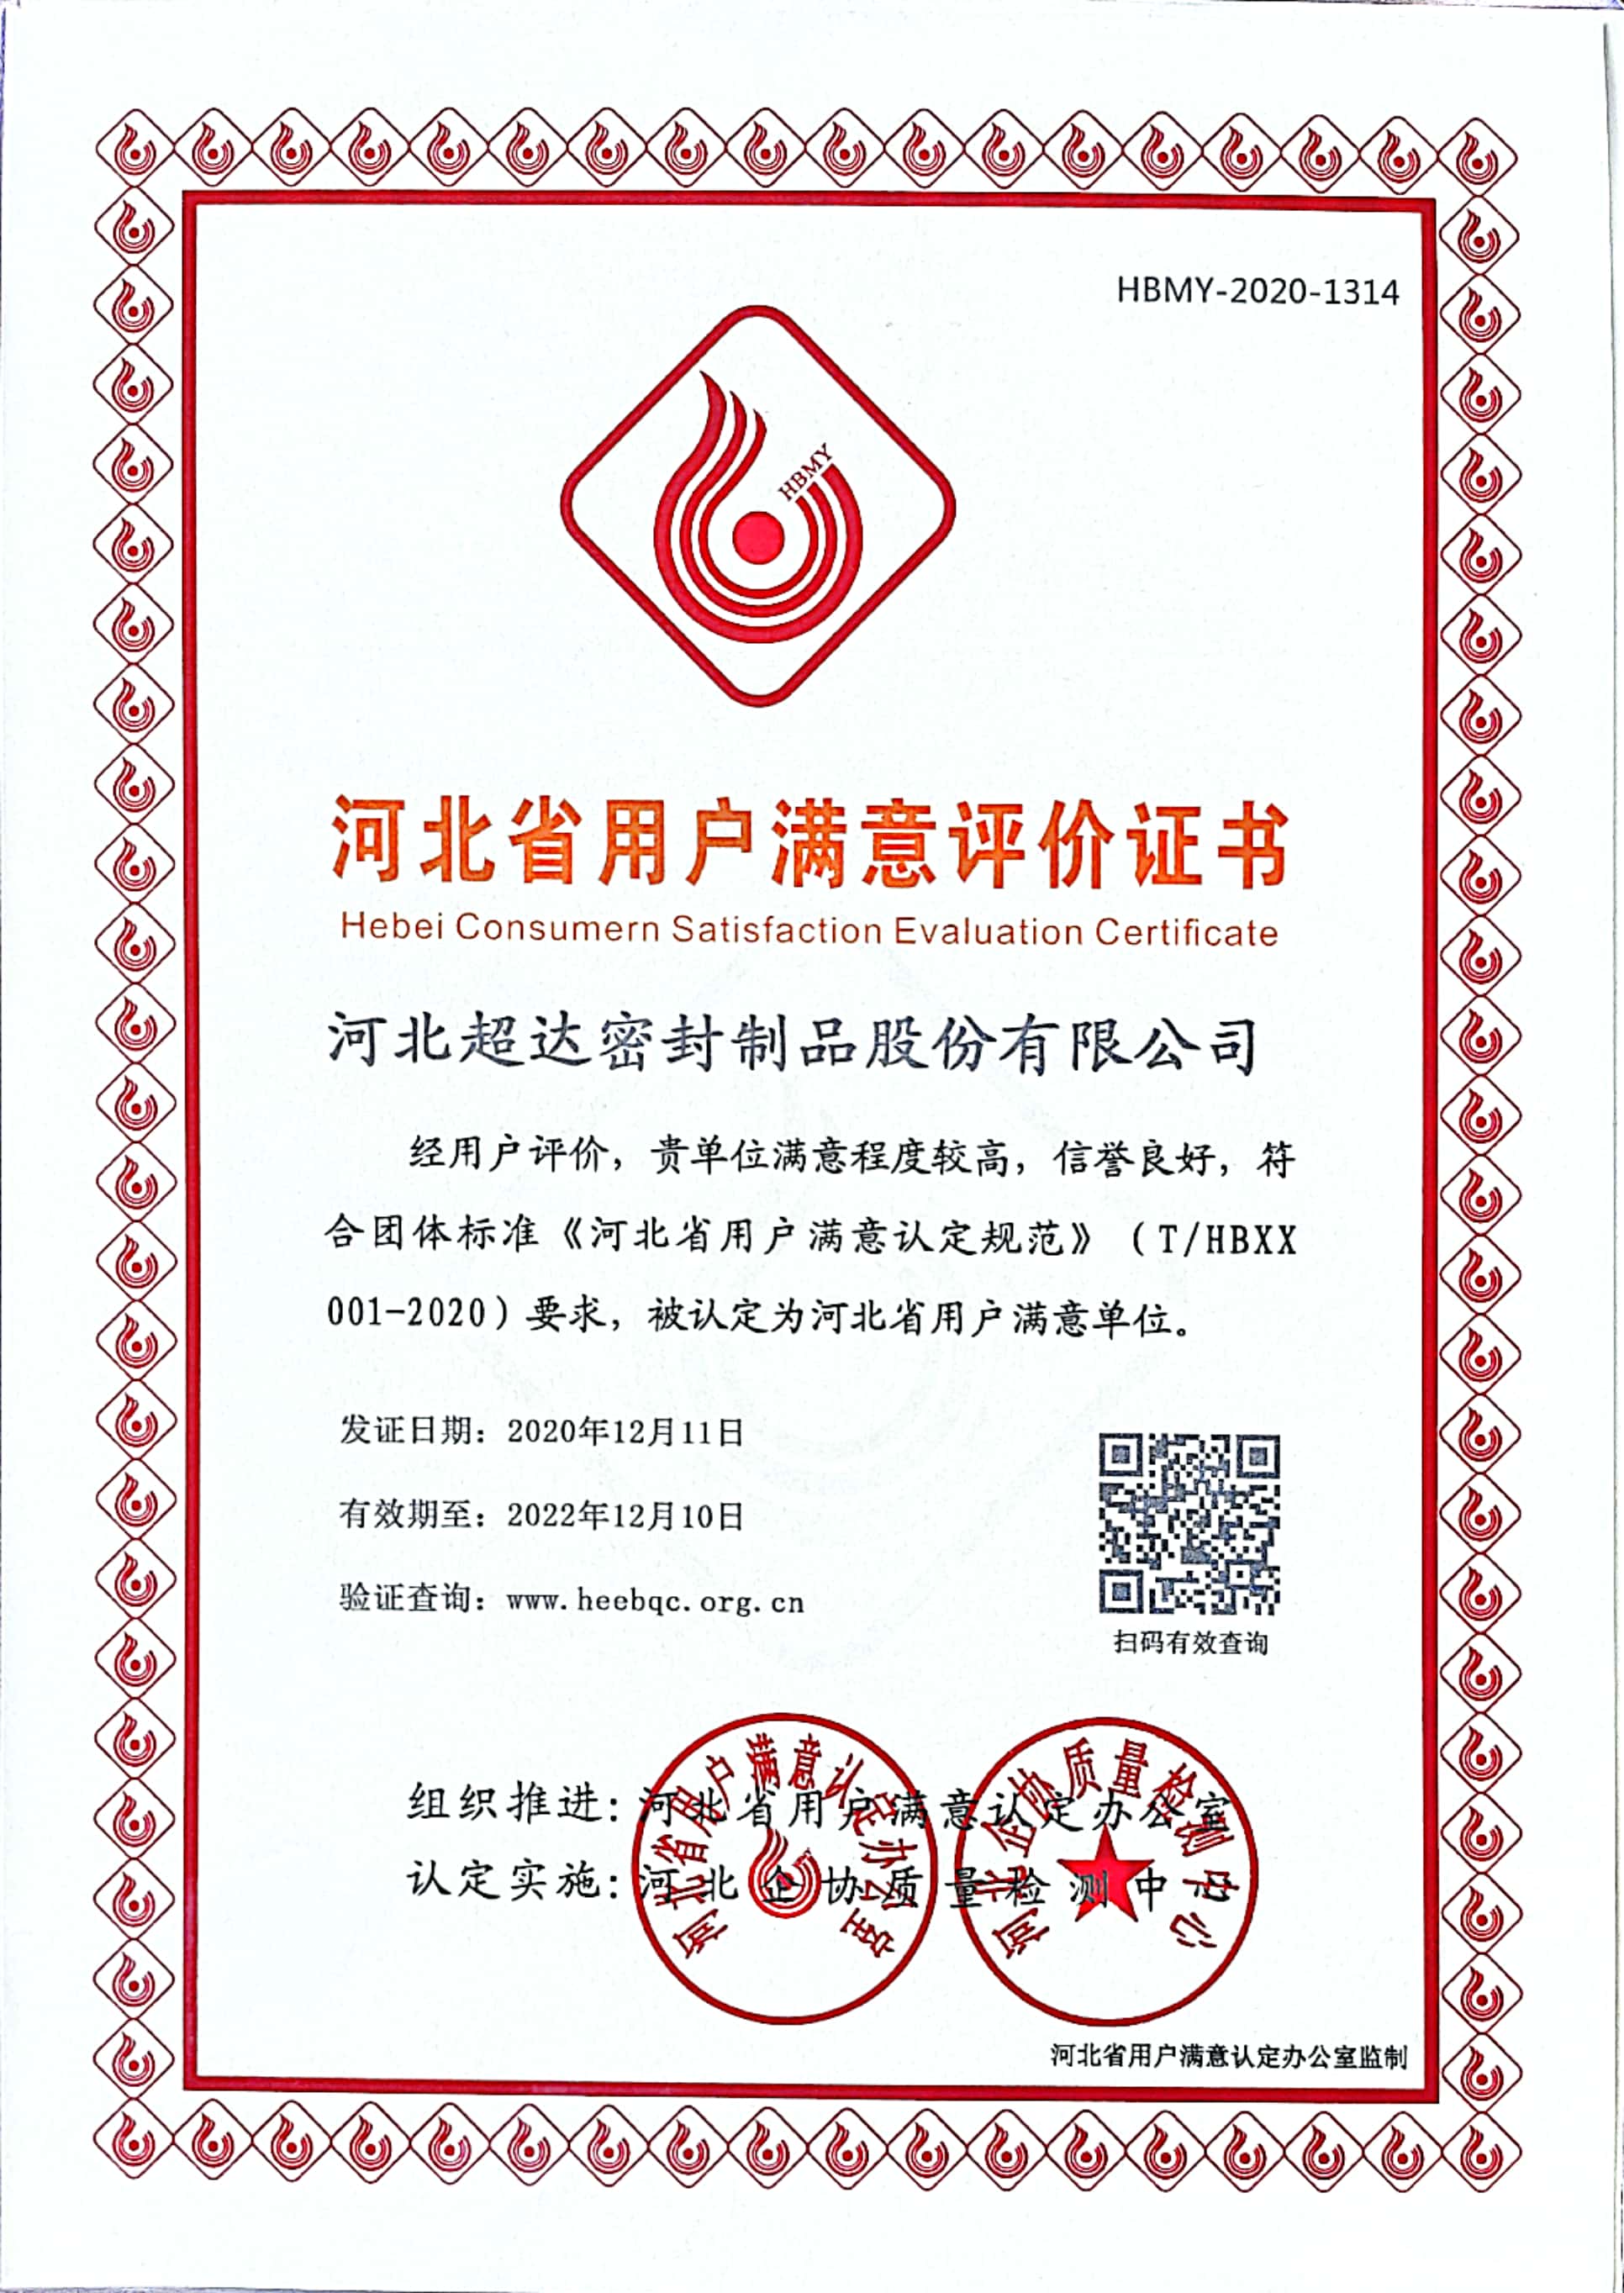 User satisfaction evaluation certificate